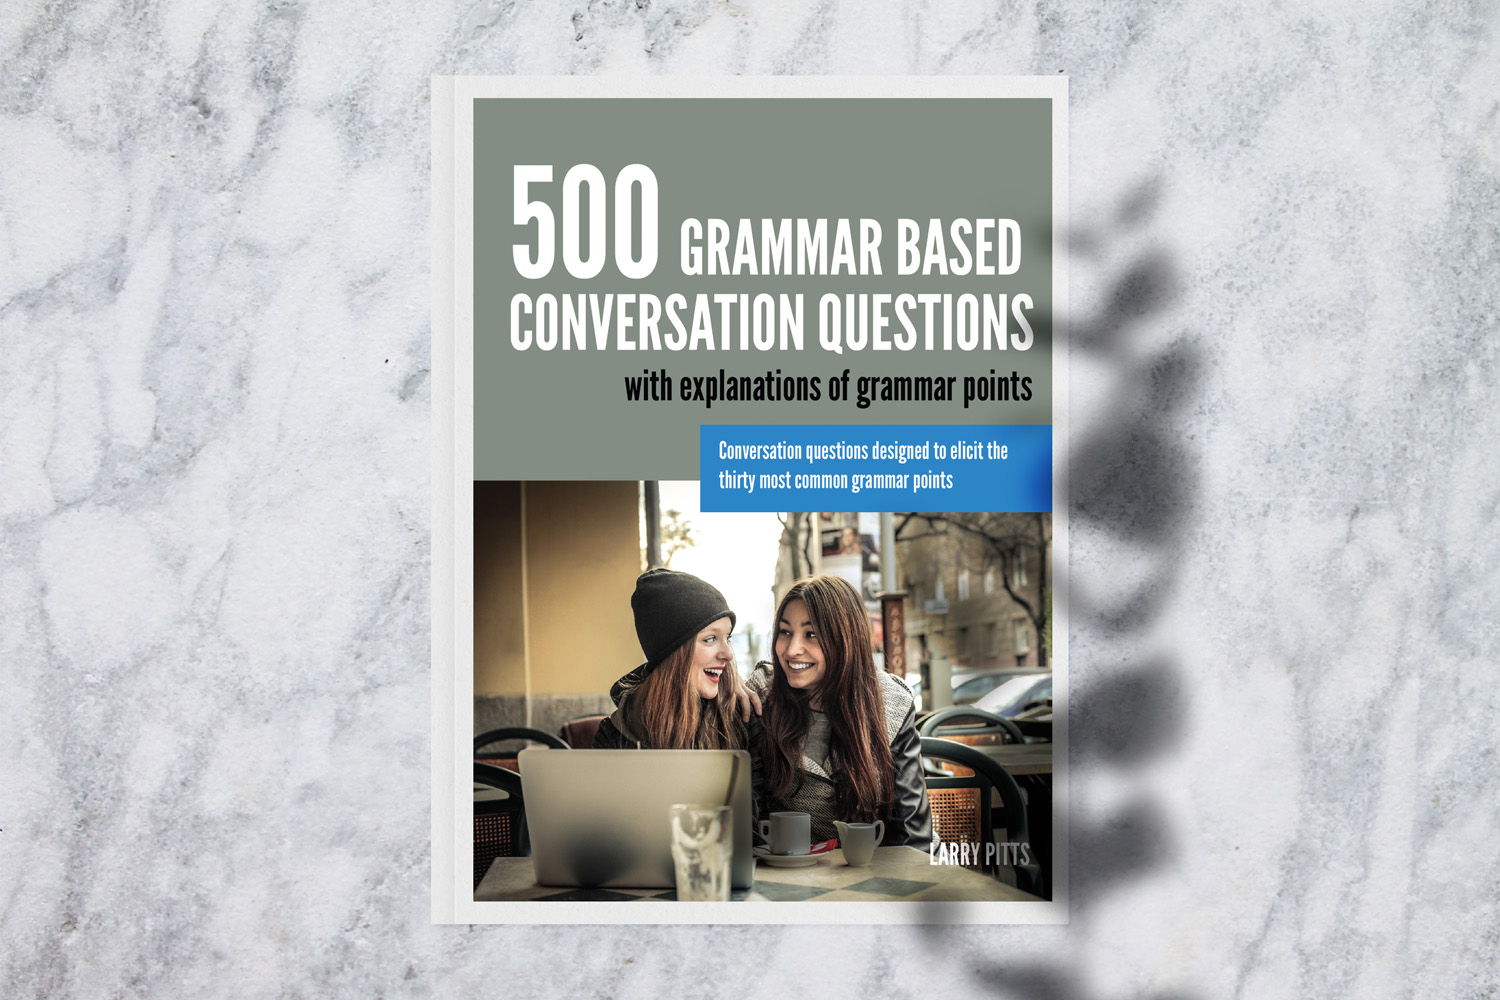 500 Grammar Based Conversation Questions